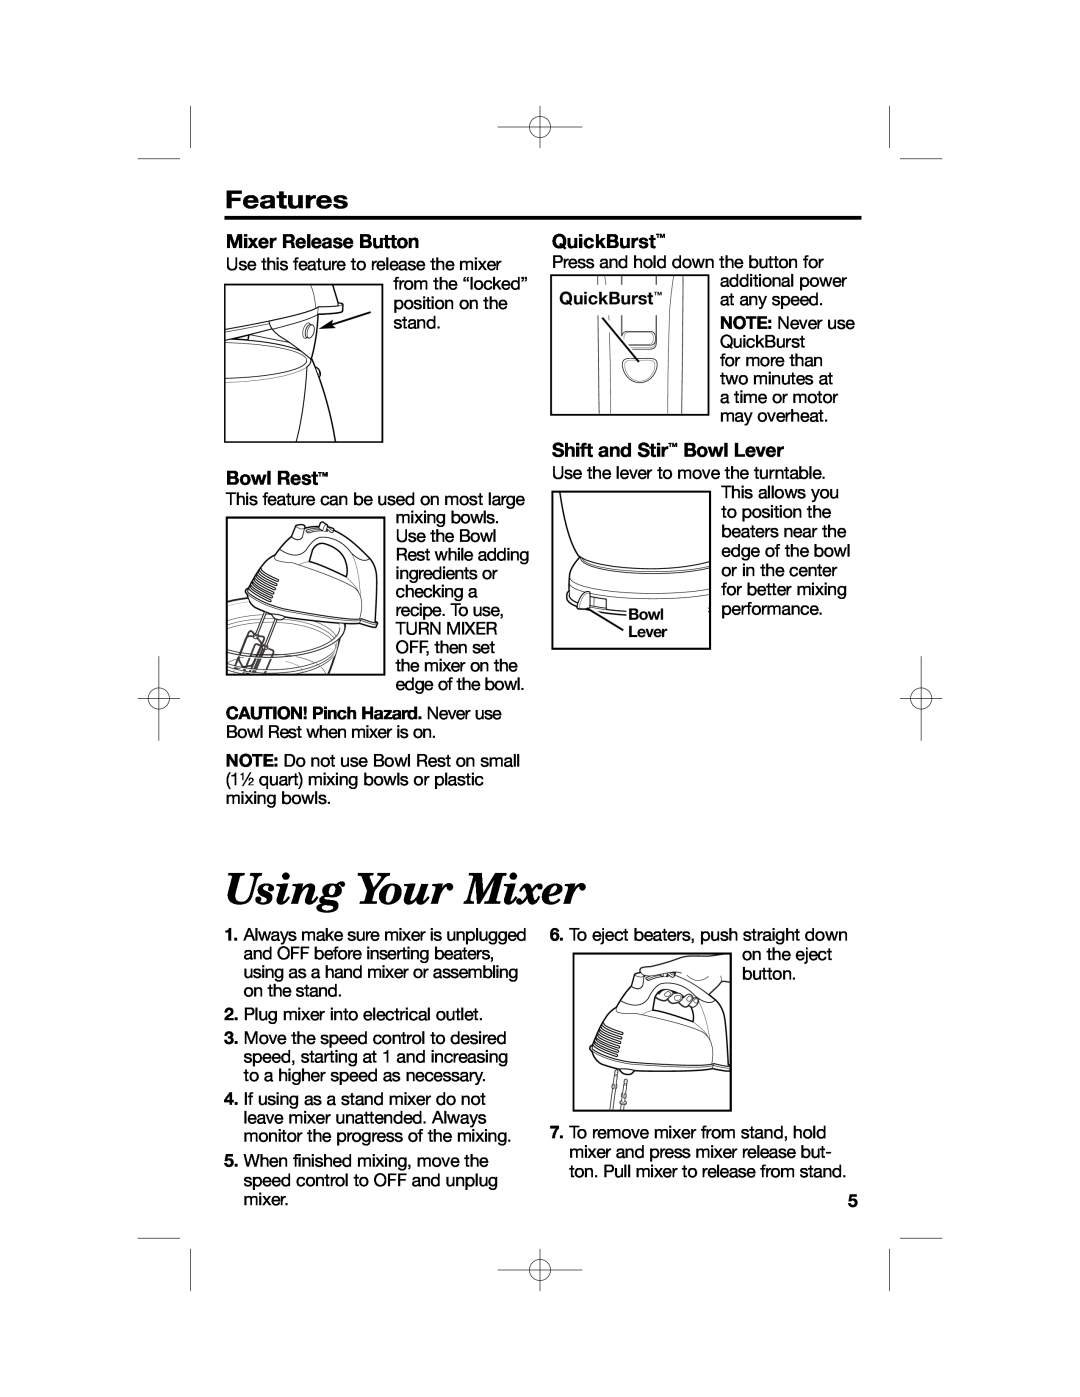 Hamilton Beach 64650 manual Using Your Mixer, Features, Mixer Release Button, Bowl Rest, QuickBurst, Bowl Lever 